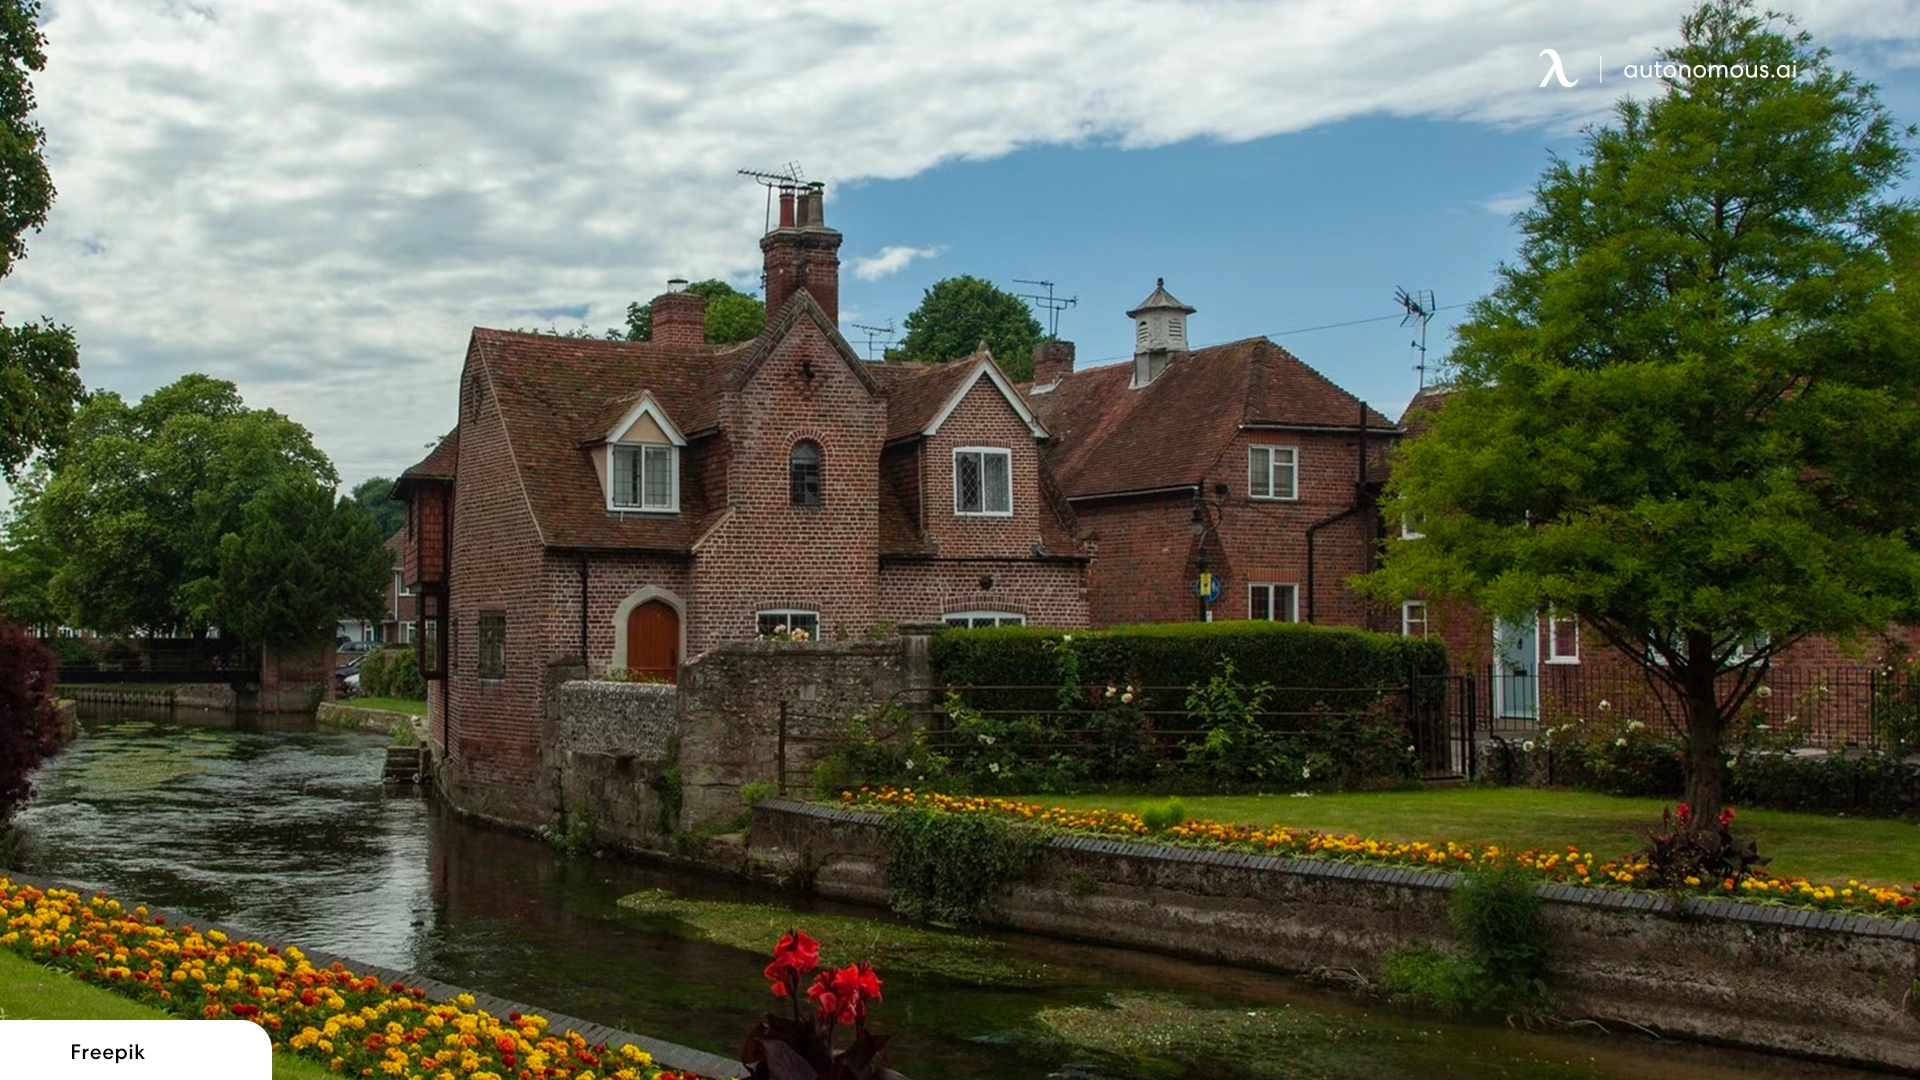 Tudor - styles of houses